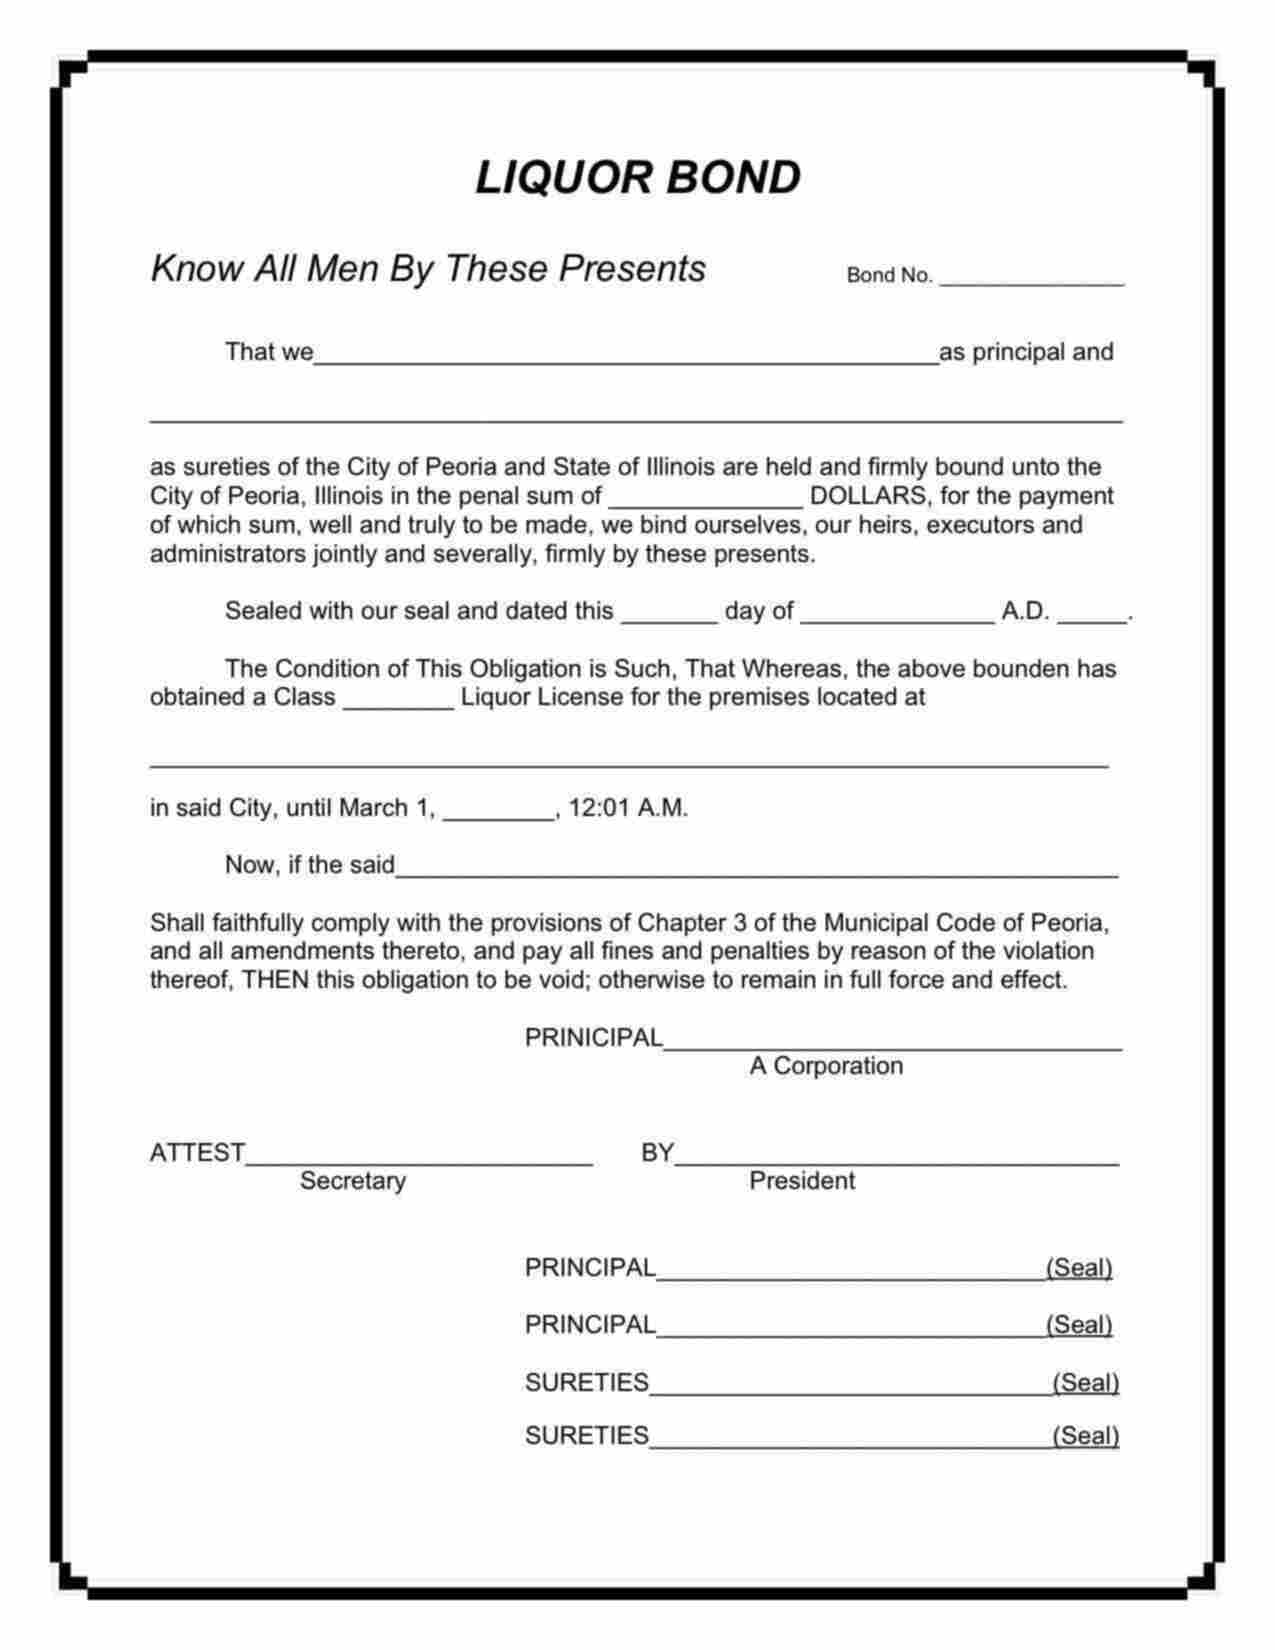 Illinois Liquor License - Class M - Mail Order Bond Form